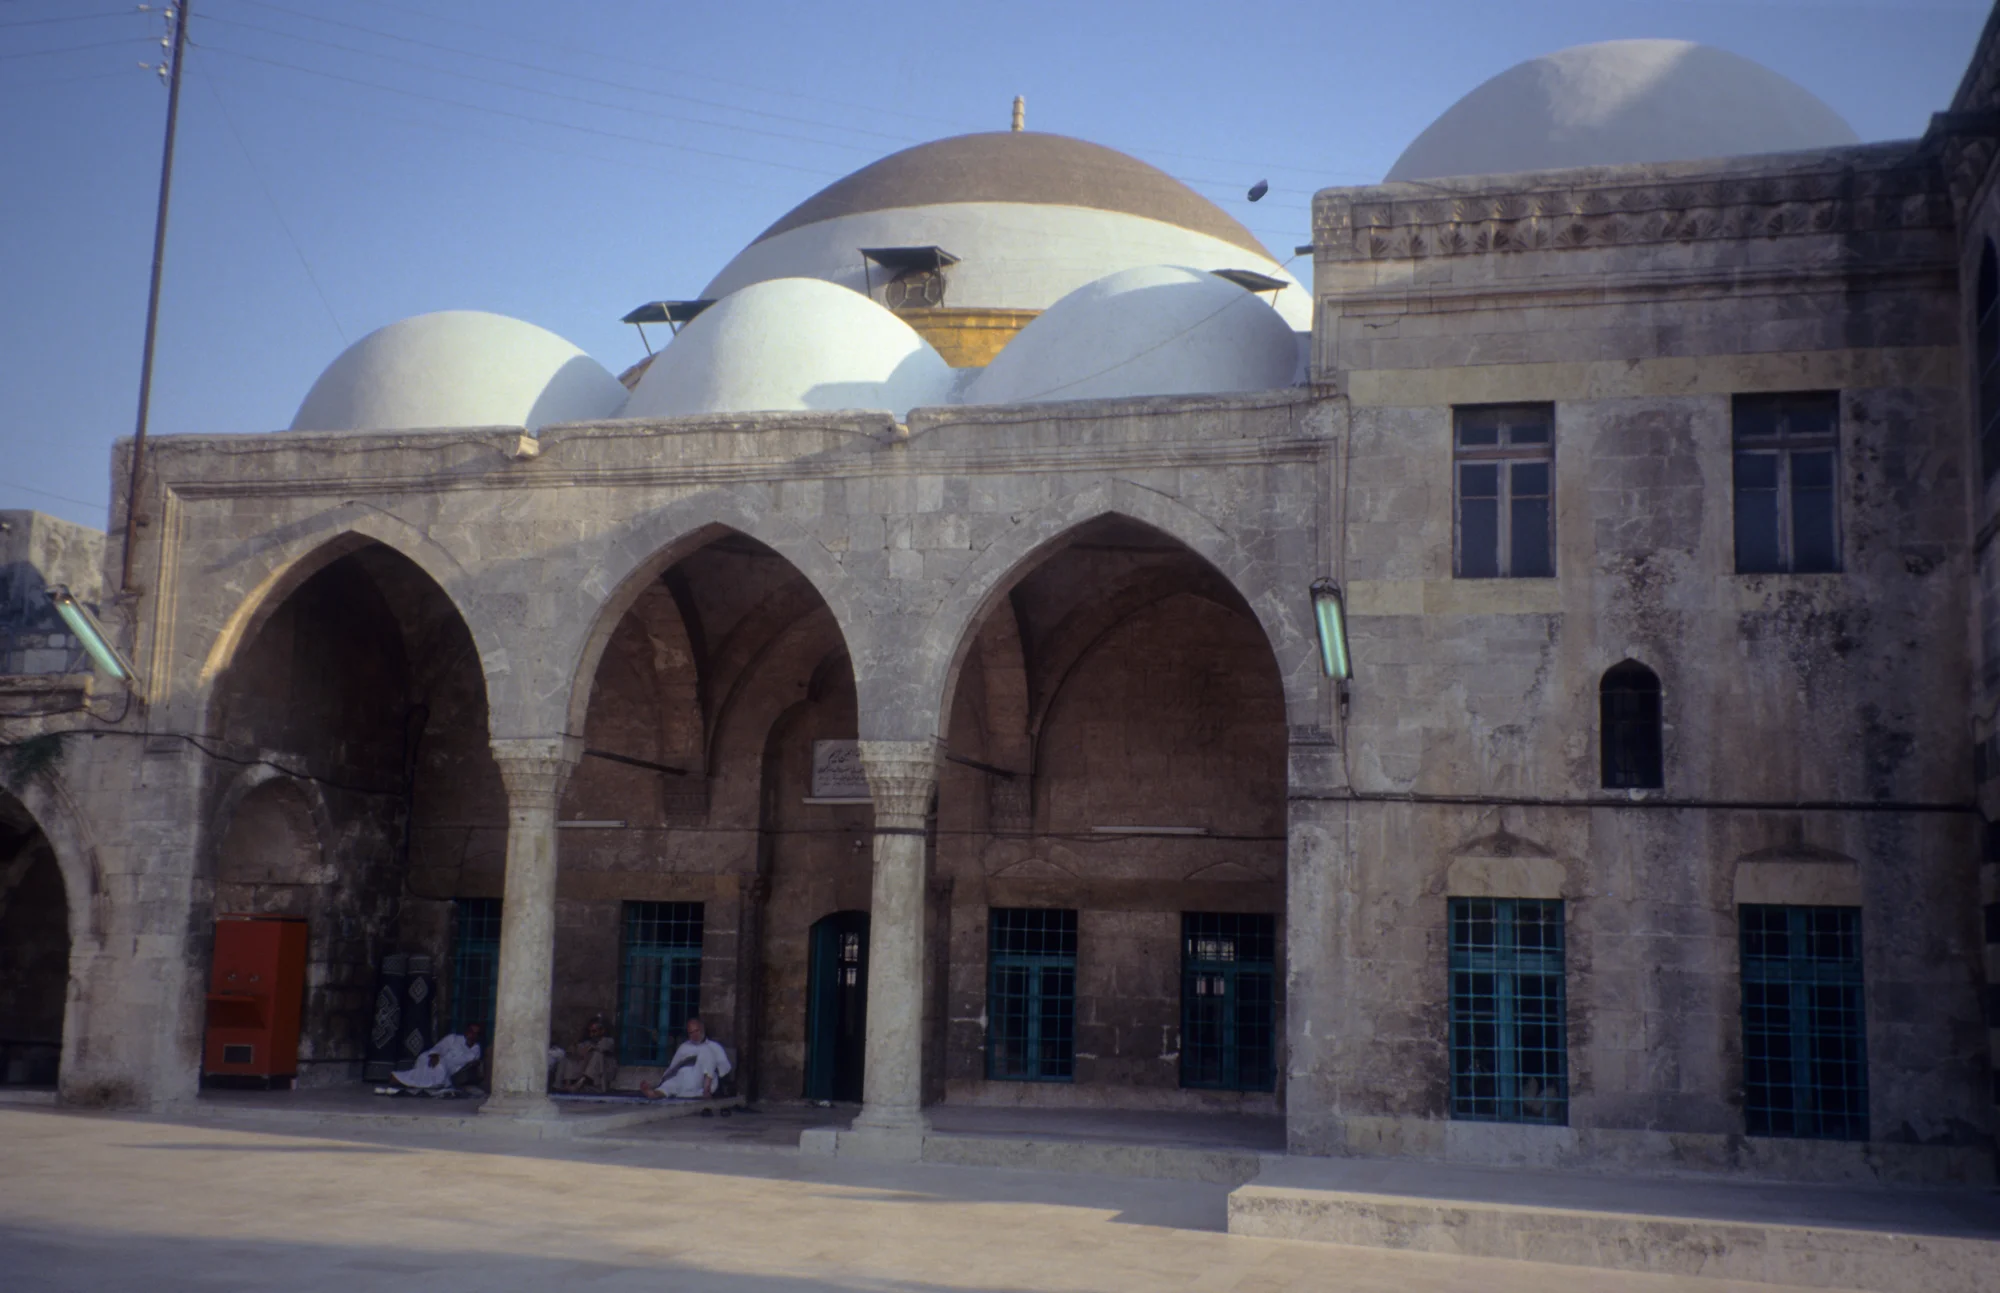 Takiyyat ash-Shaykh Abu Bakr, north facade - arcade and courtyard